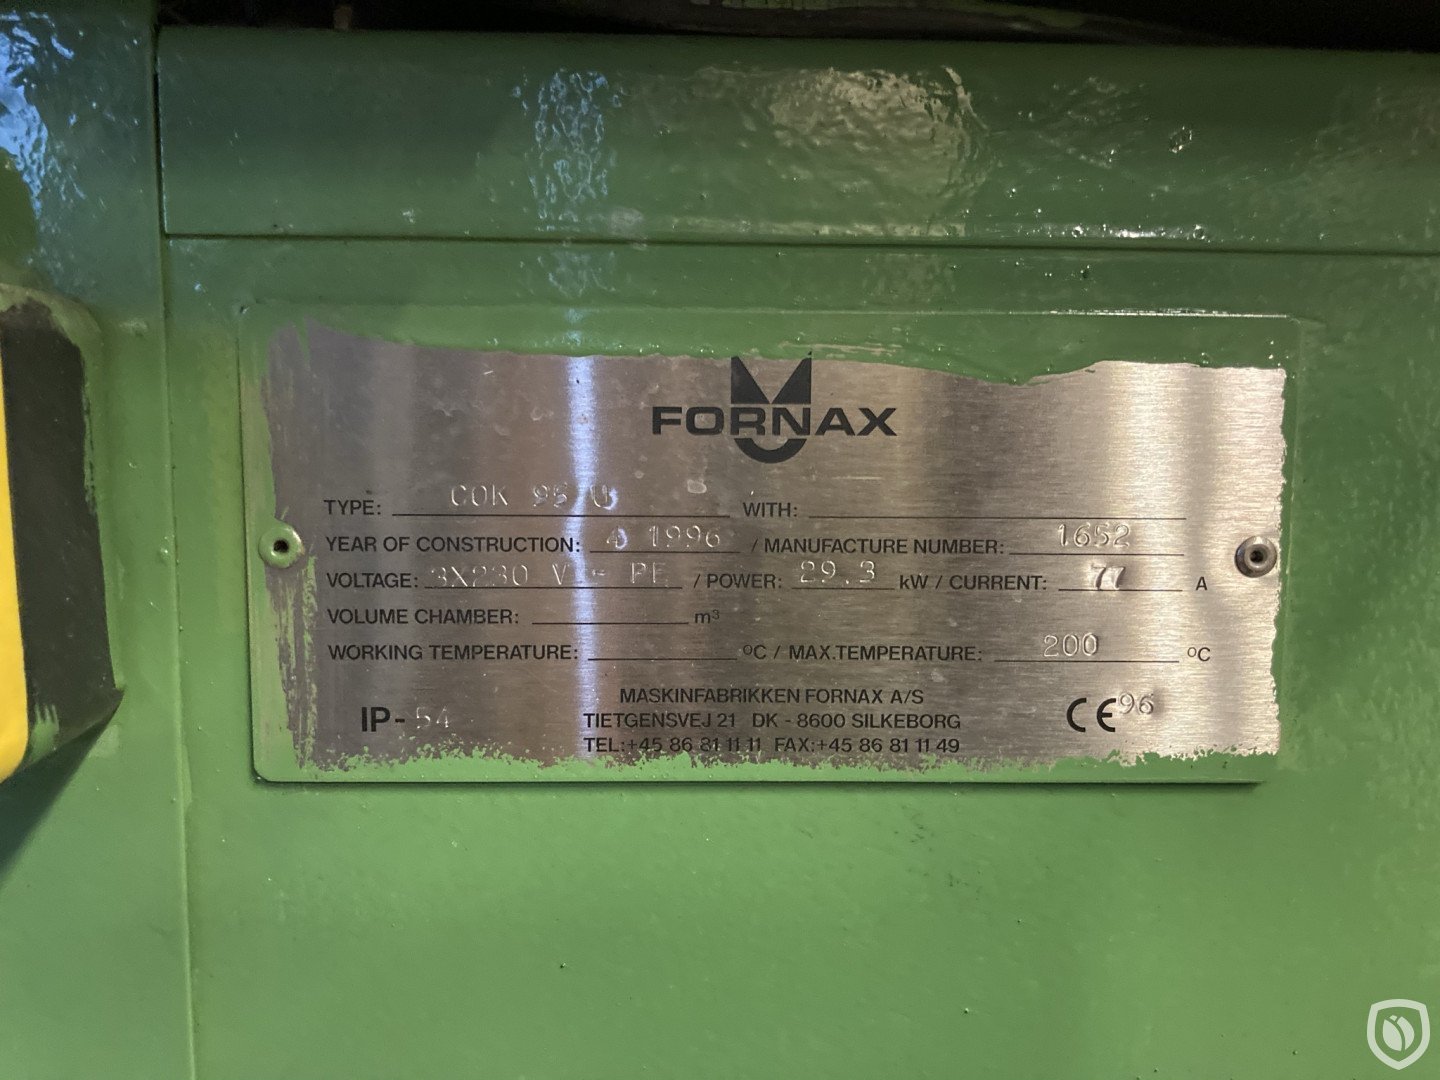 Fornax COK 95 U